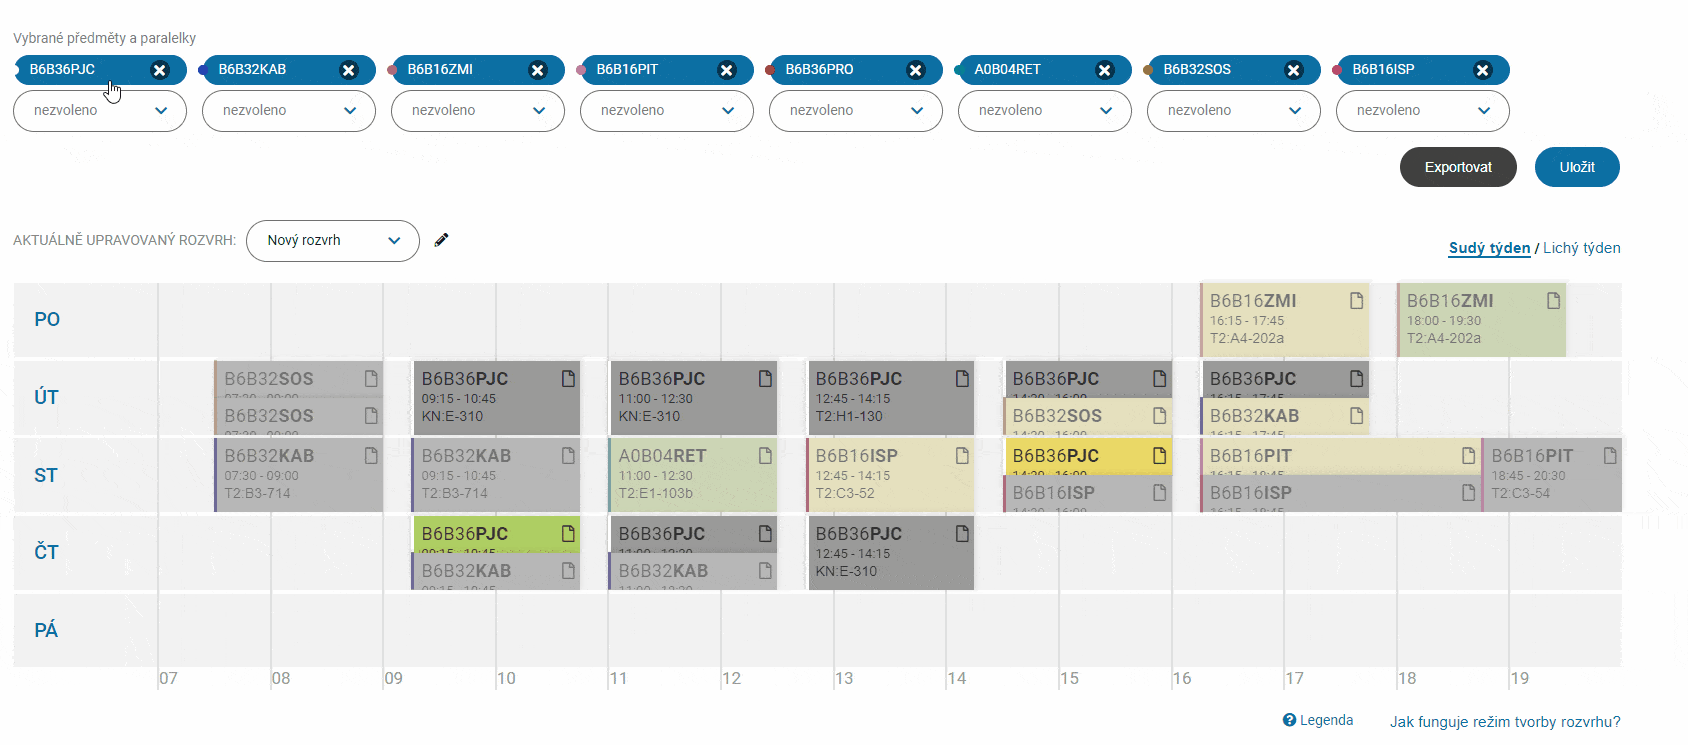 Timetable creation mode